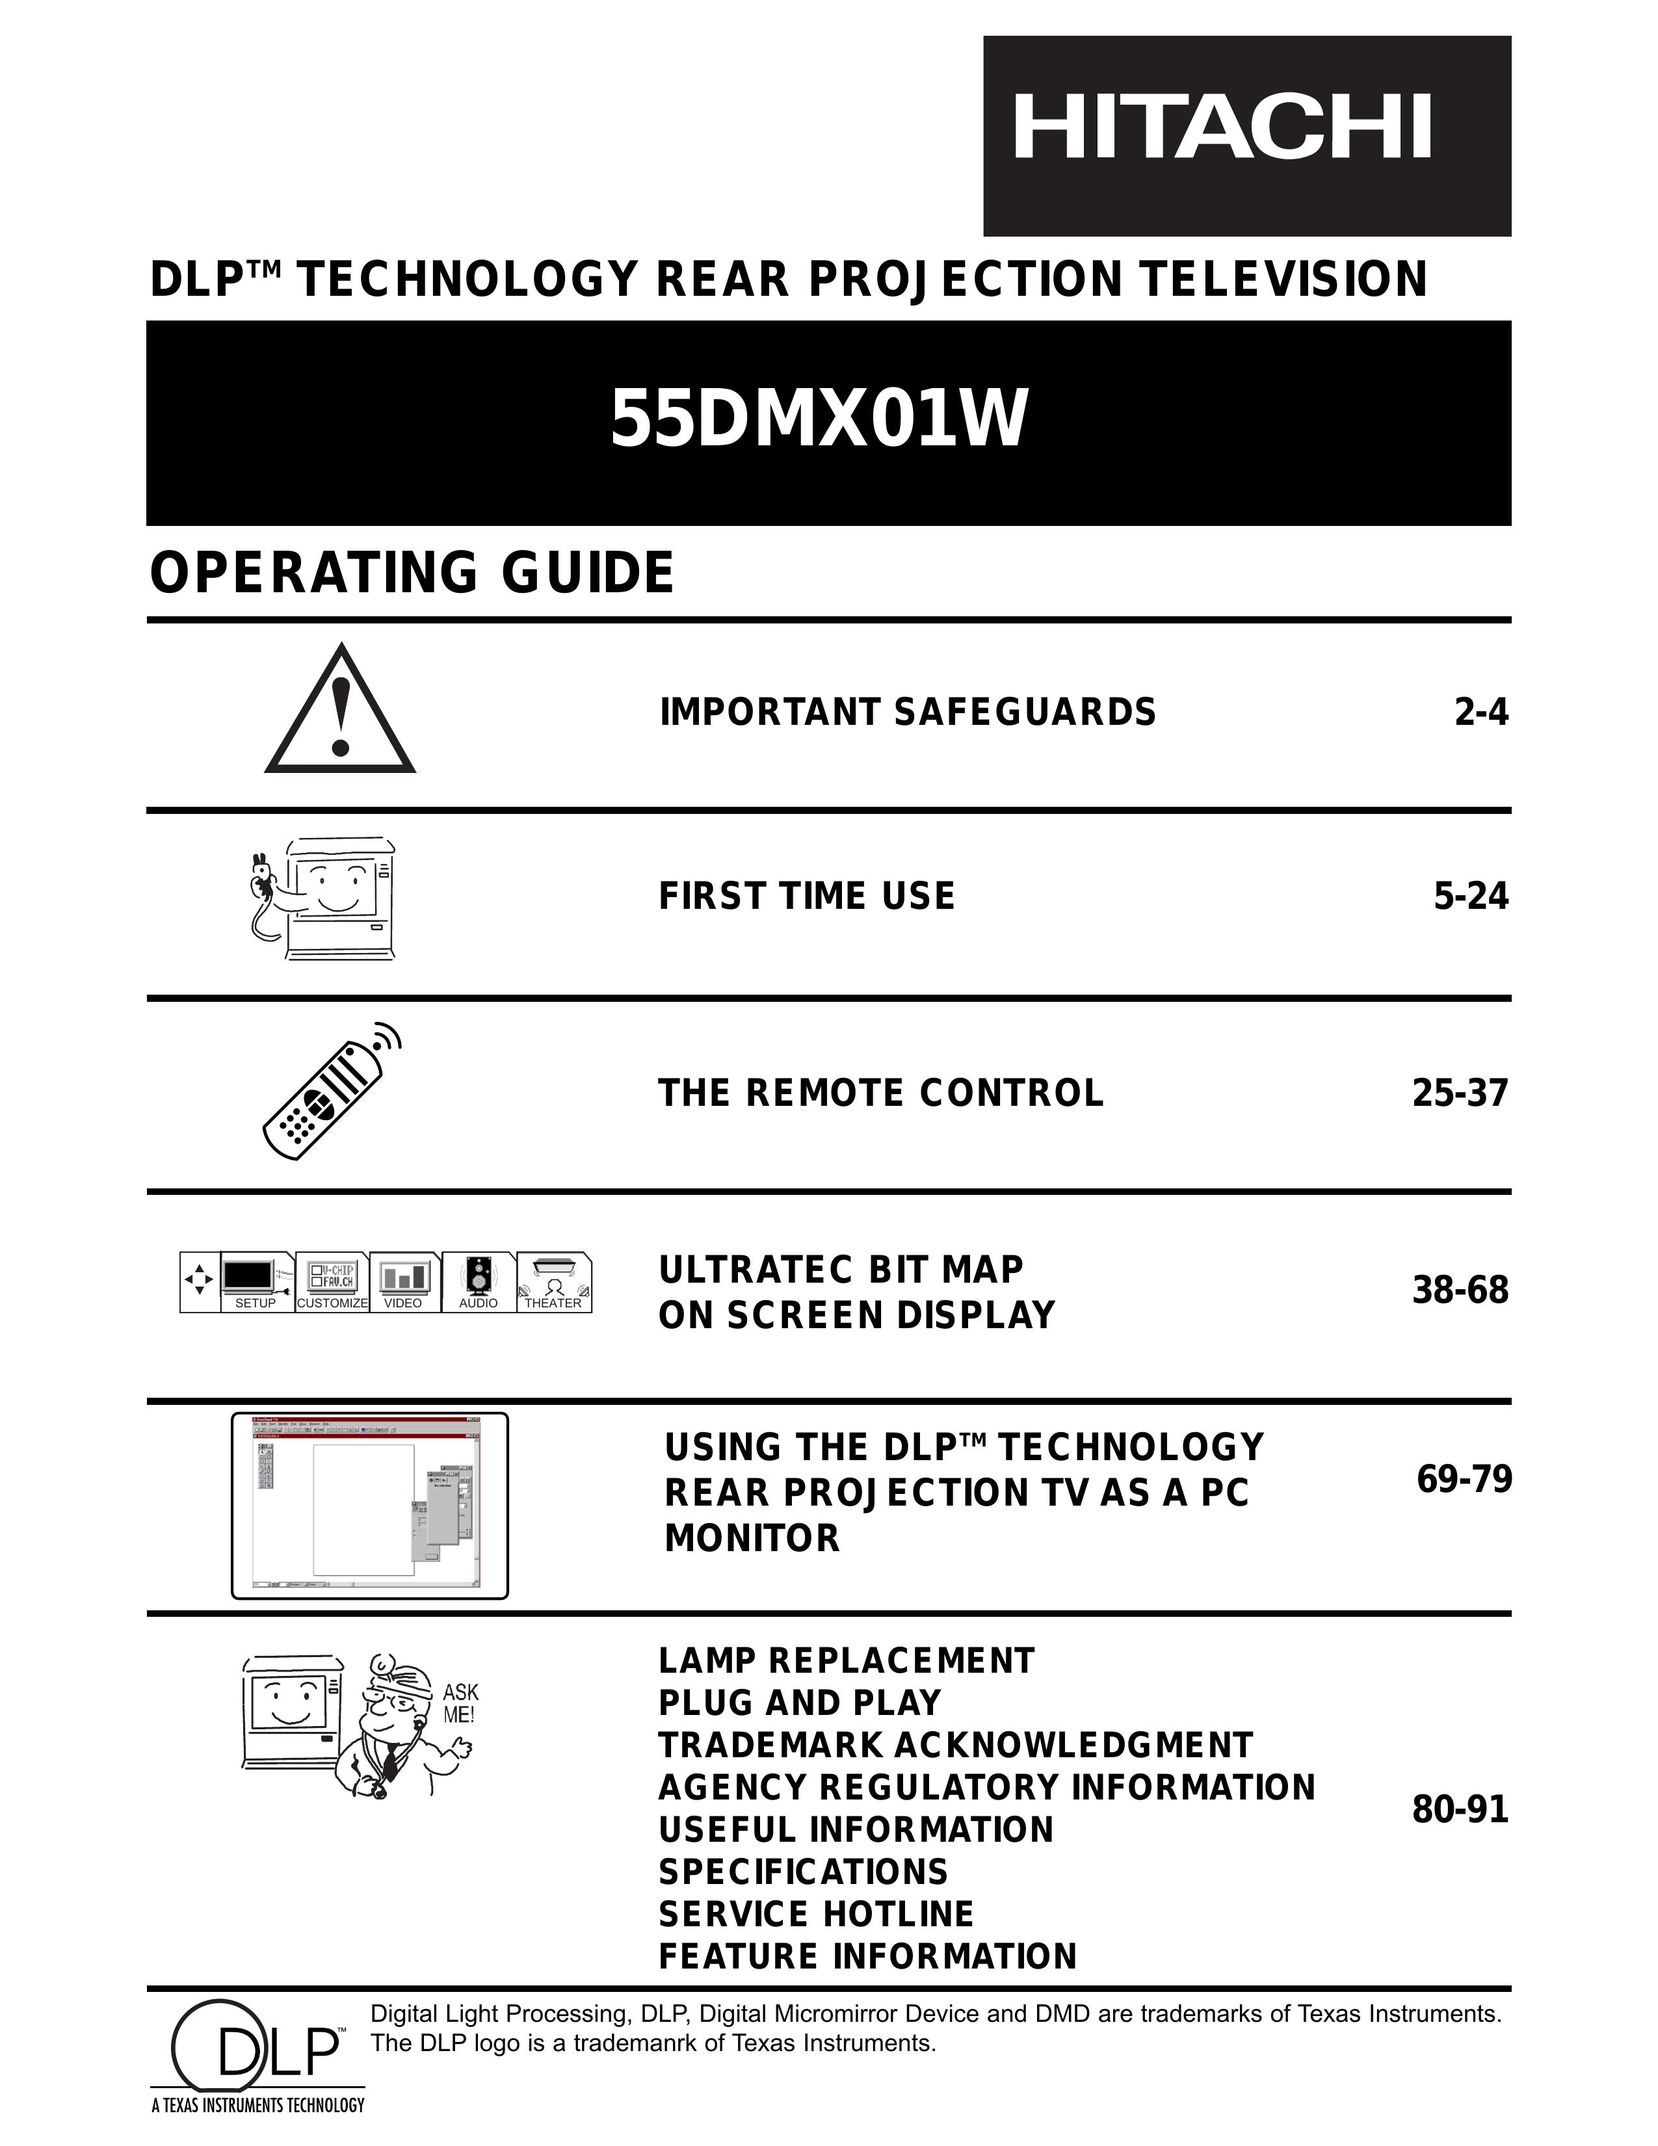 Hitachi 55DMX01W CRT Television User Manual